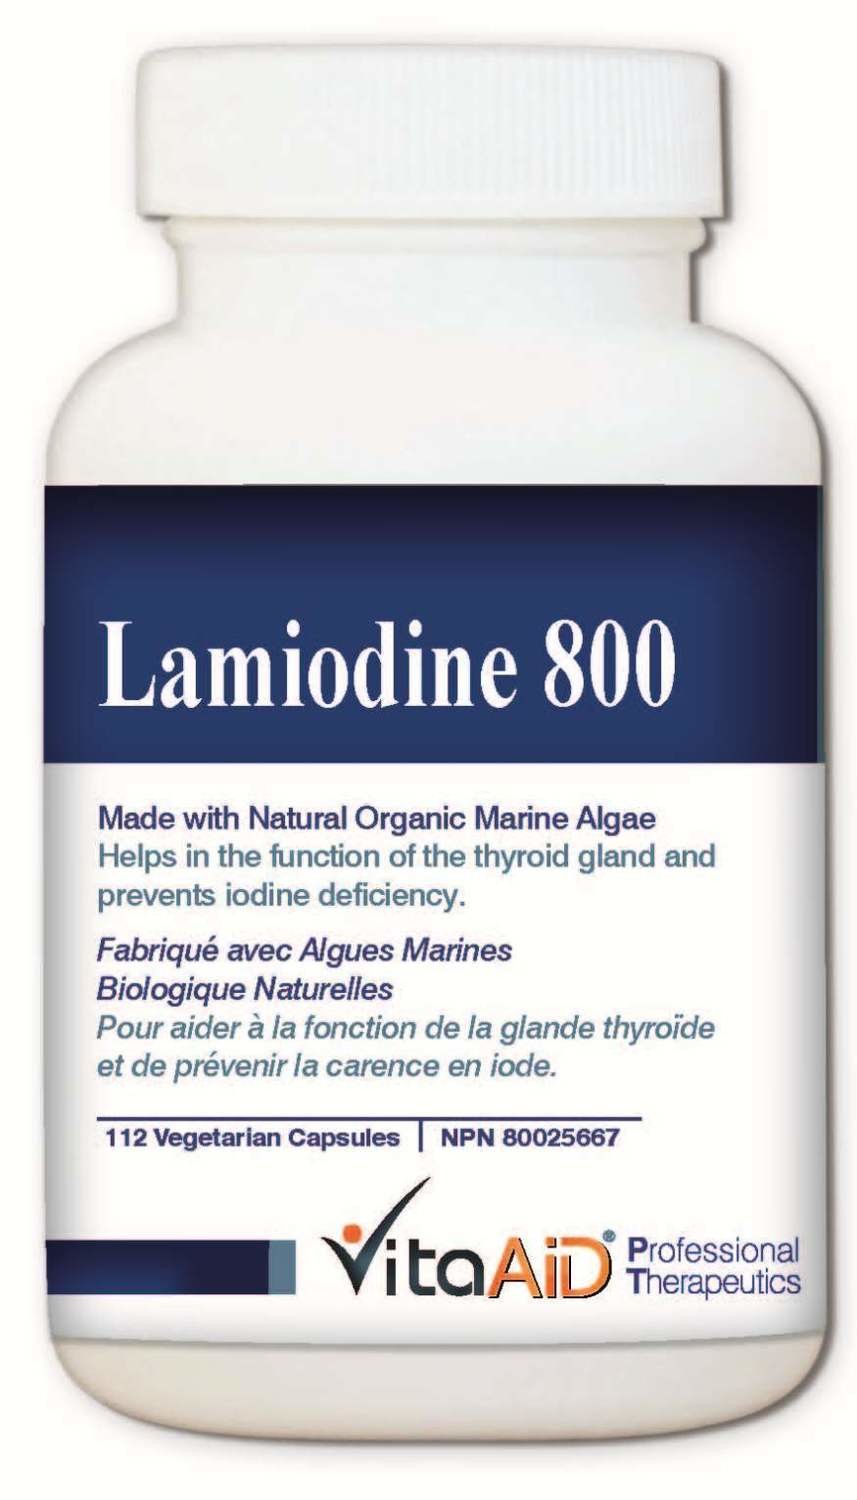 Lamiodine 800 by Vita Aid